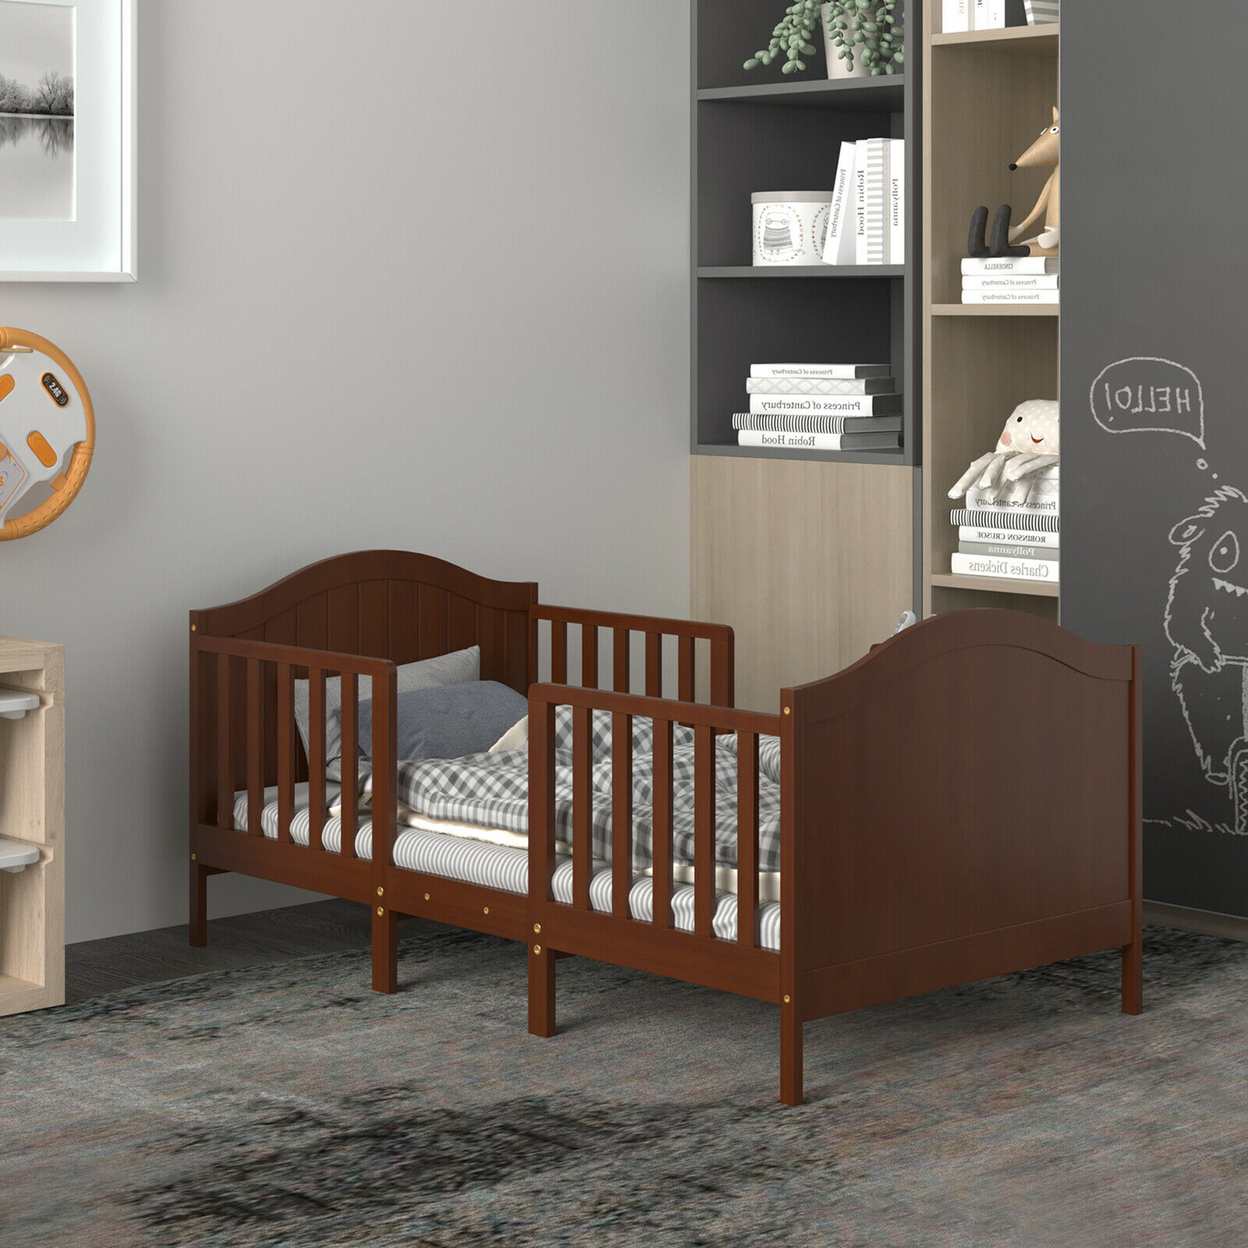 2-in-1 Convertible Toddler Bed Kids Wooden Bedroom Furniture W/ Guardrails - Brown